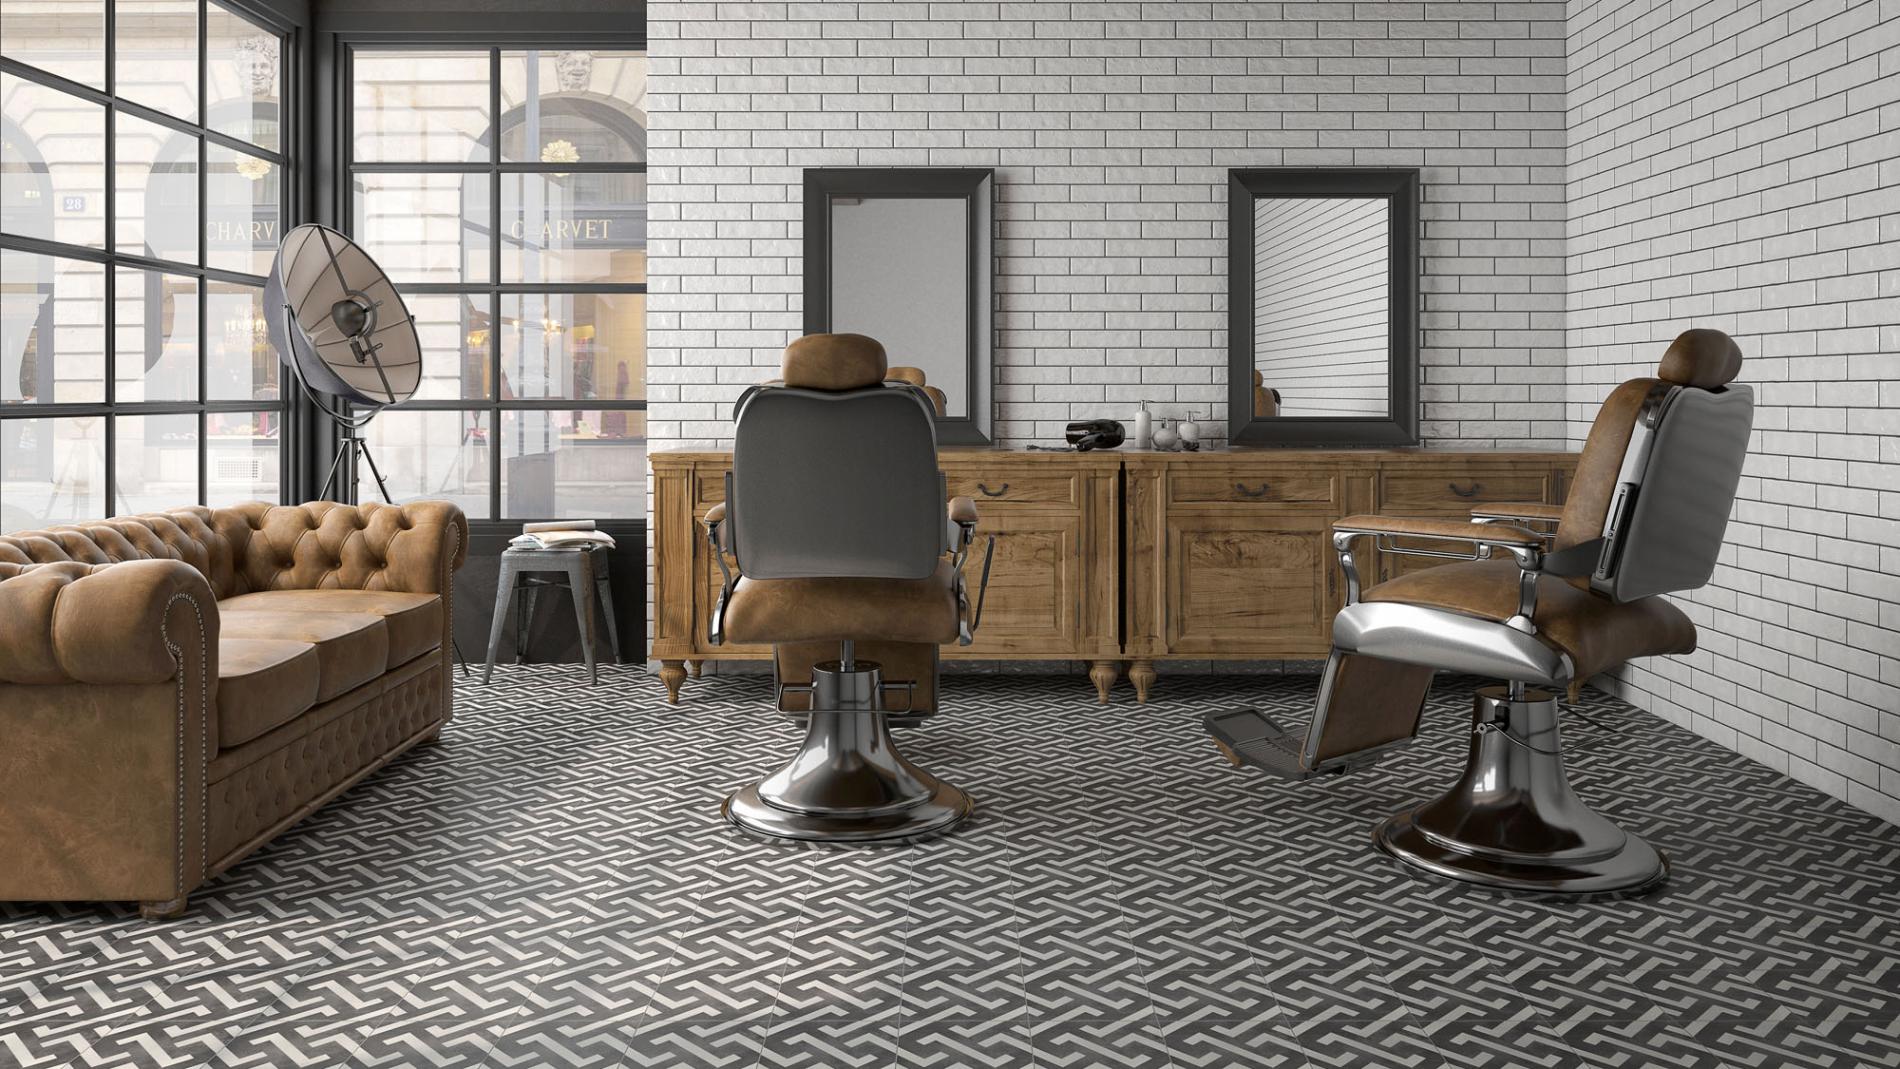 Signac tiles featured on flooring of barbershop